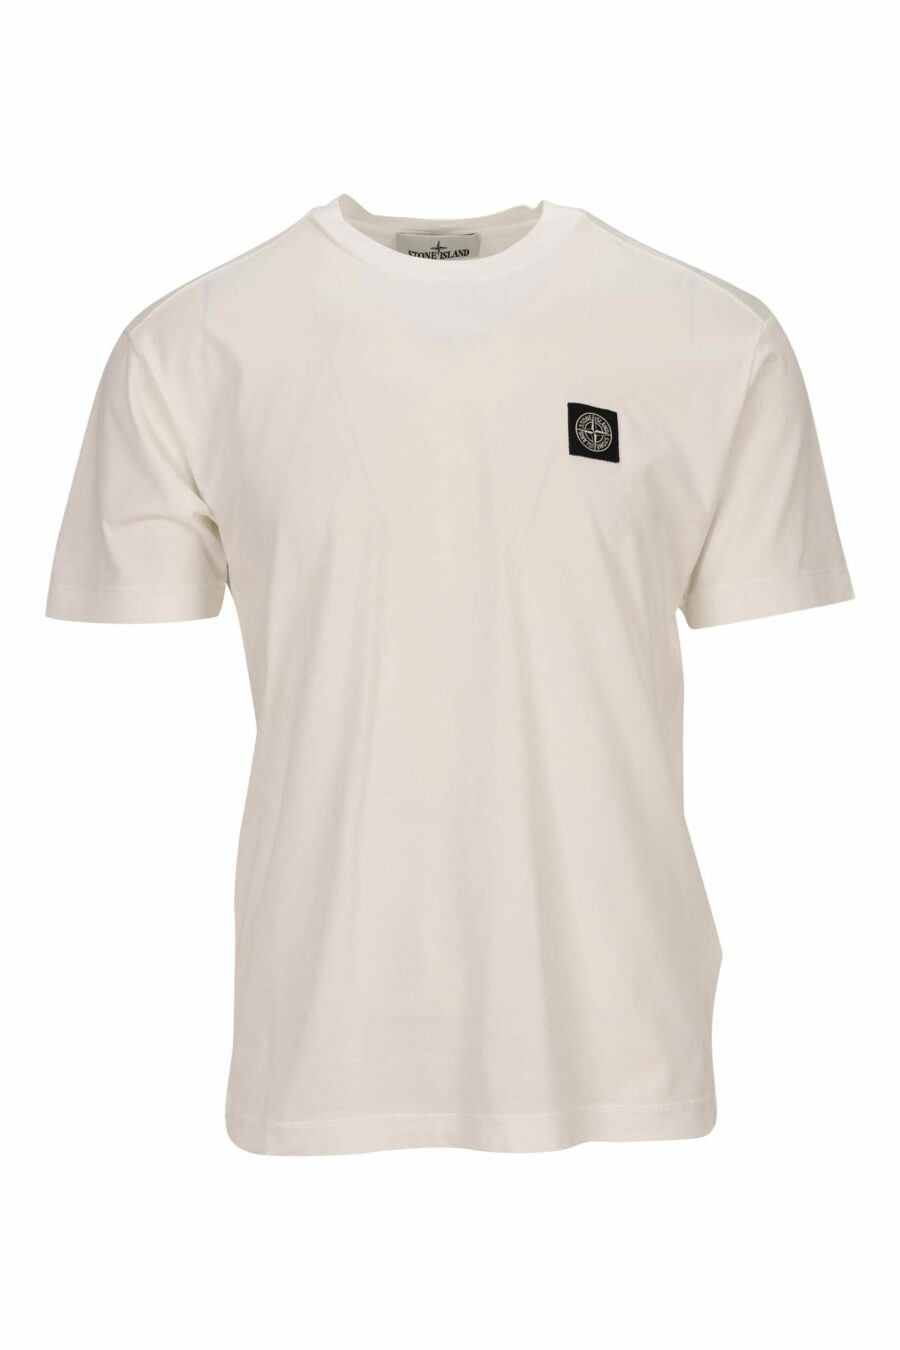 T-shirt blanc avec mini logo boussole - 8052572855146 échelonné